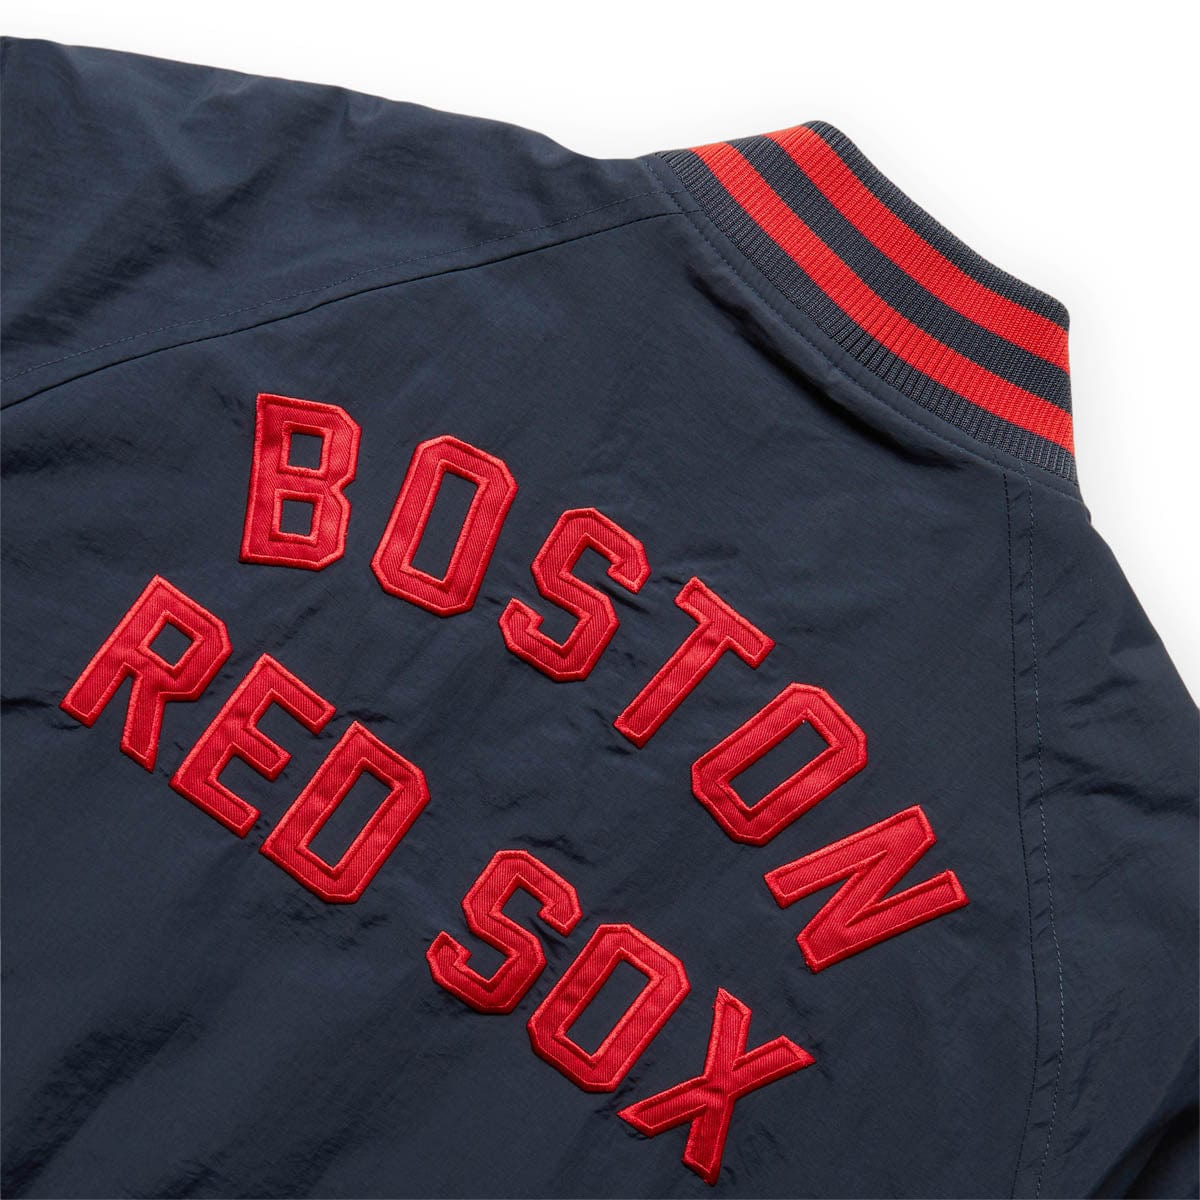 New Era Outerwear BOSTON RED SOX WARM UP JACKET